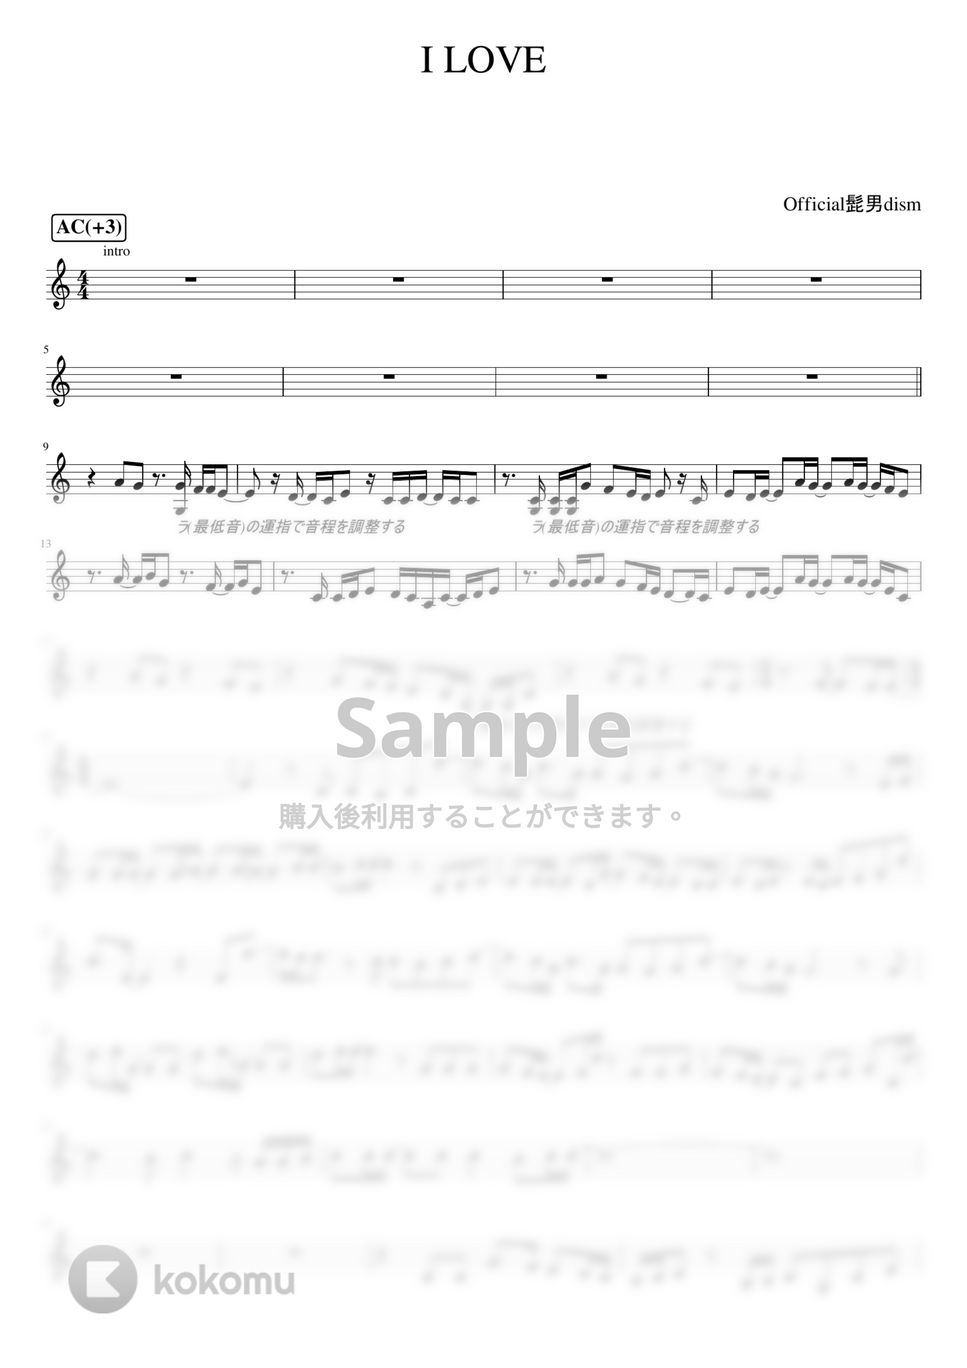 Official髭男dism - I LOVE... (オカリナ用(C管)メロディー譜) by もりたあいか